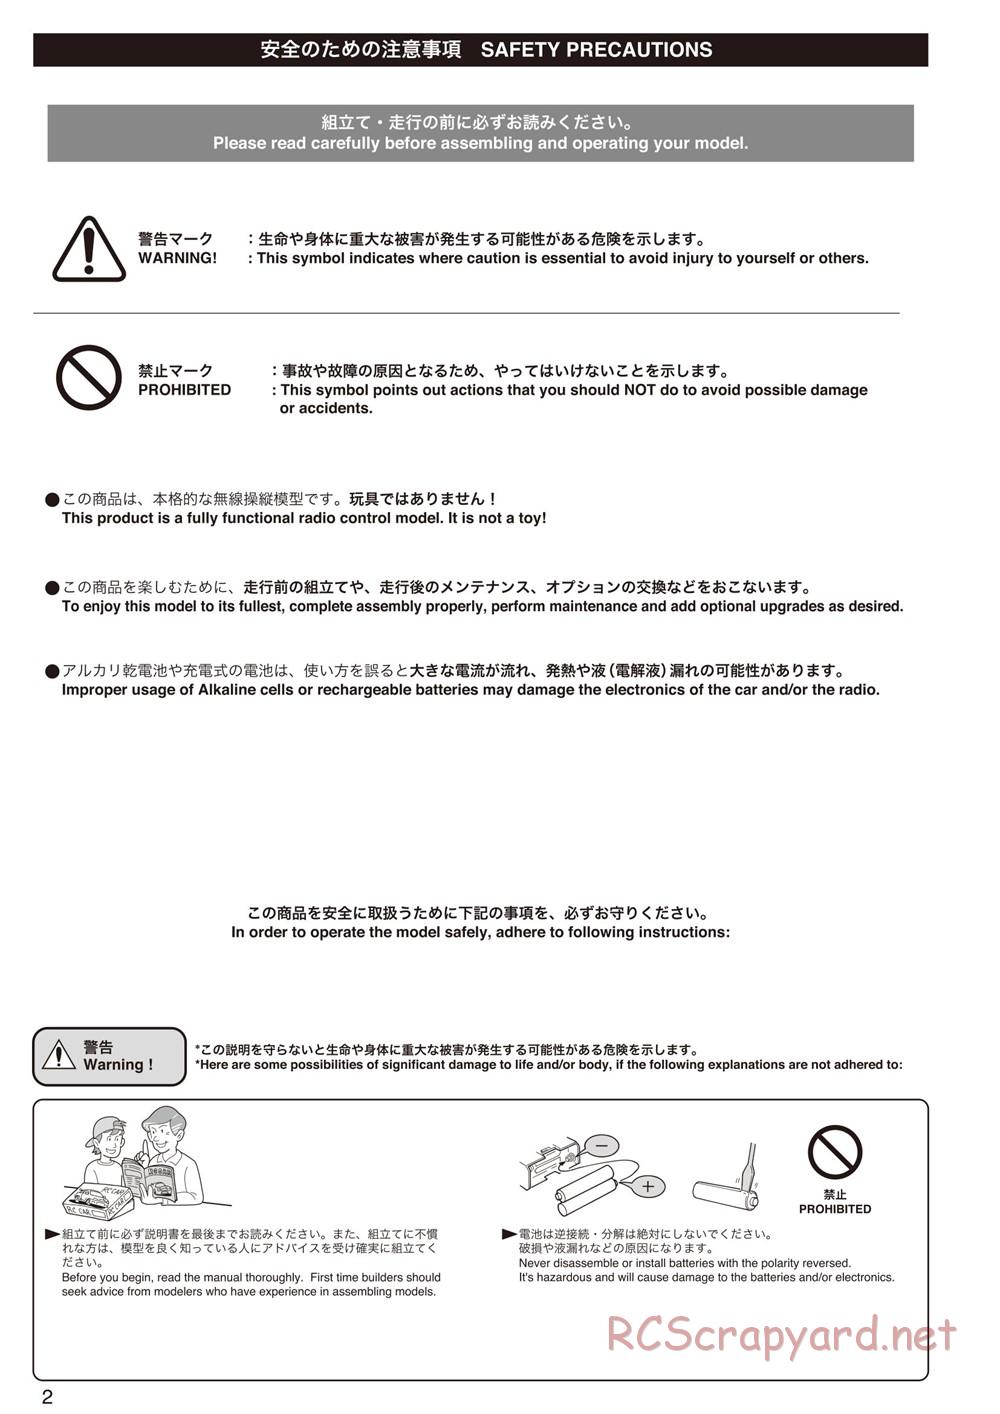 Kyosho - Inferno MP9 TKI2 - Manual - Page 2